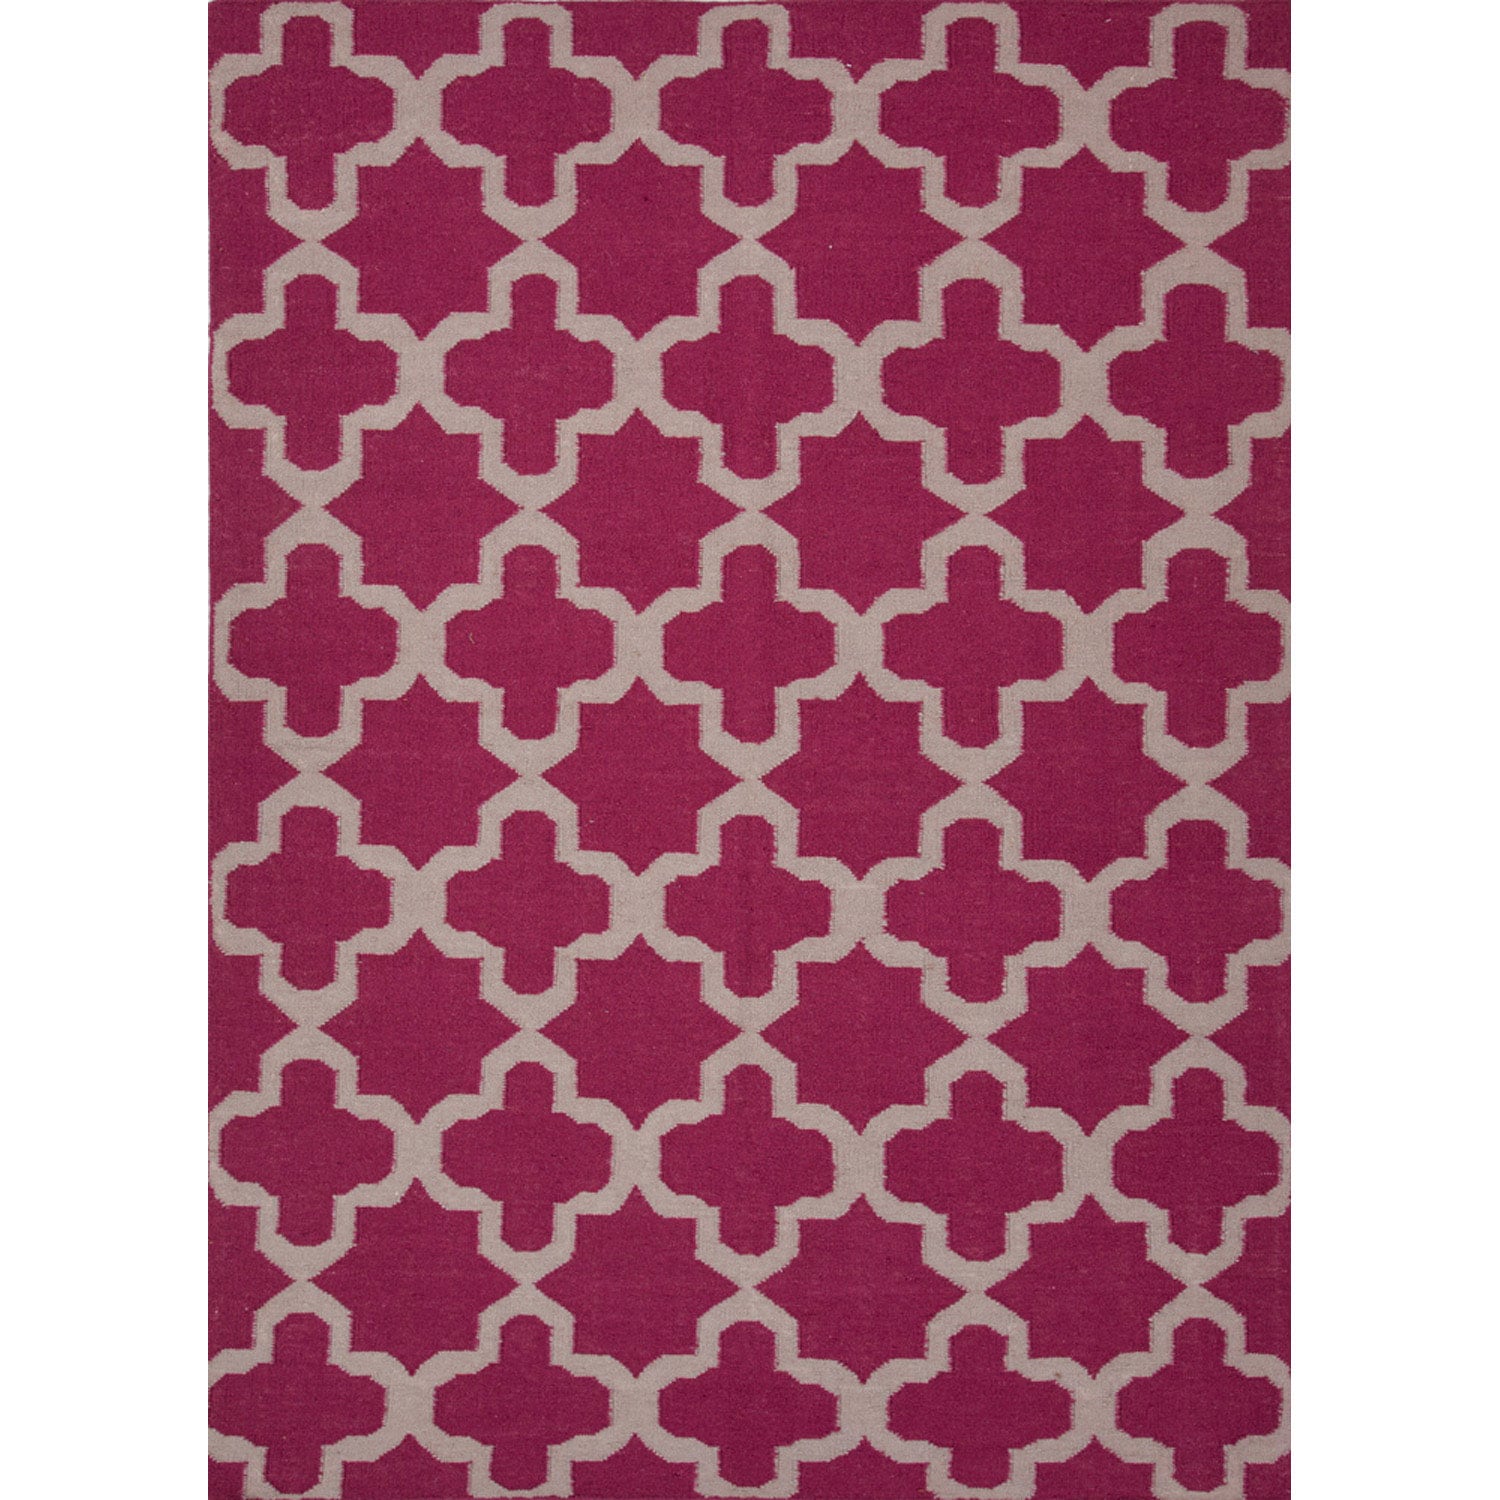 Handmade Flat Weave Geometric Pink/ Purple Rug (36 X 56)